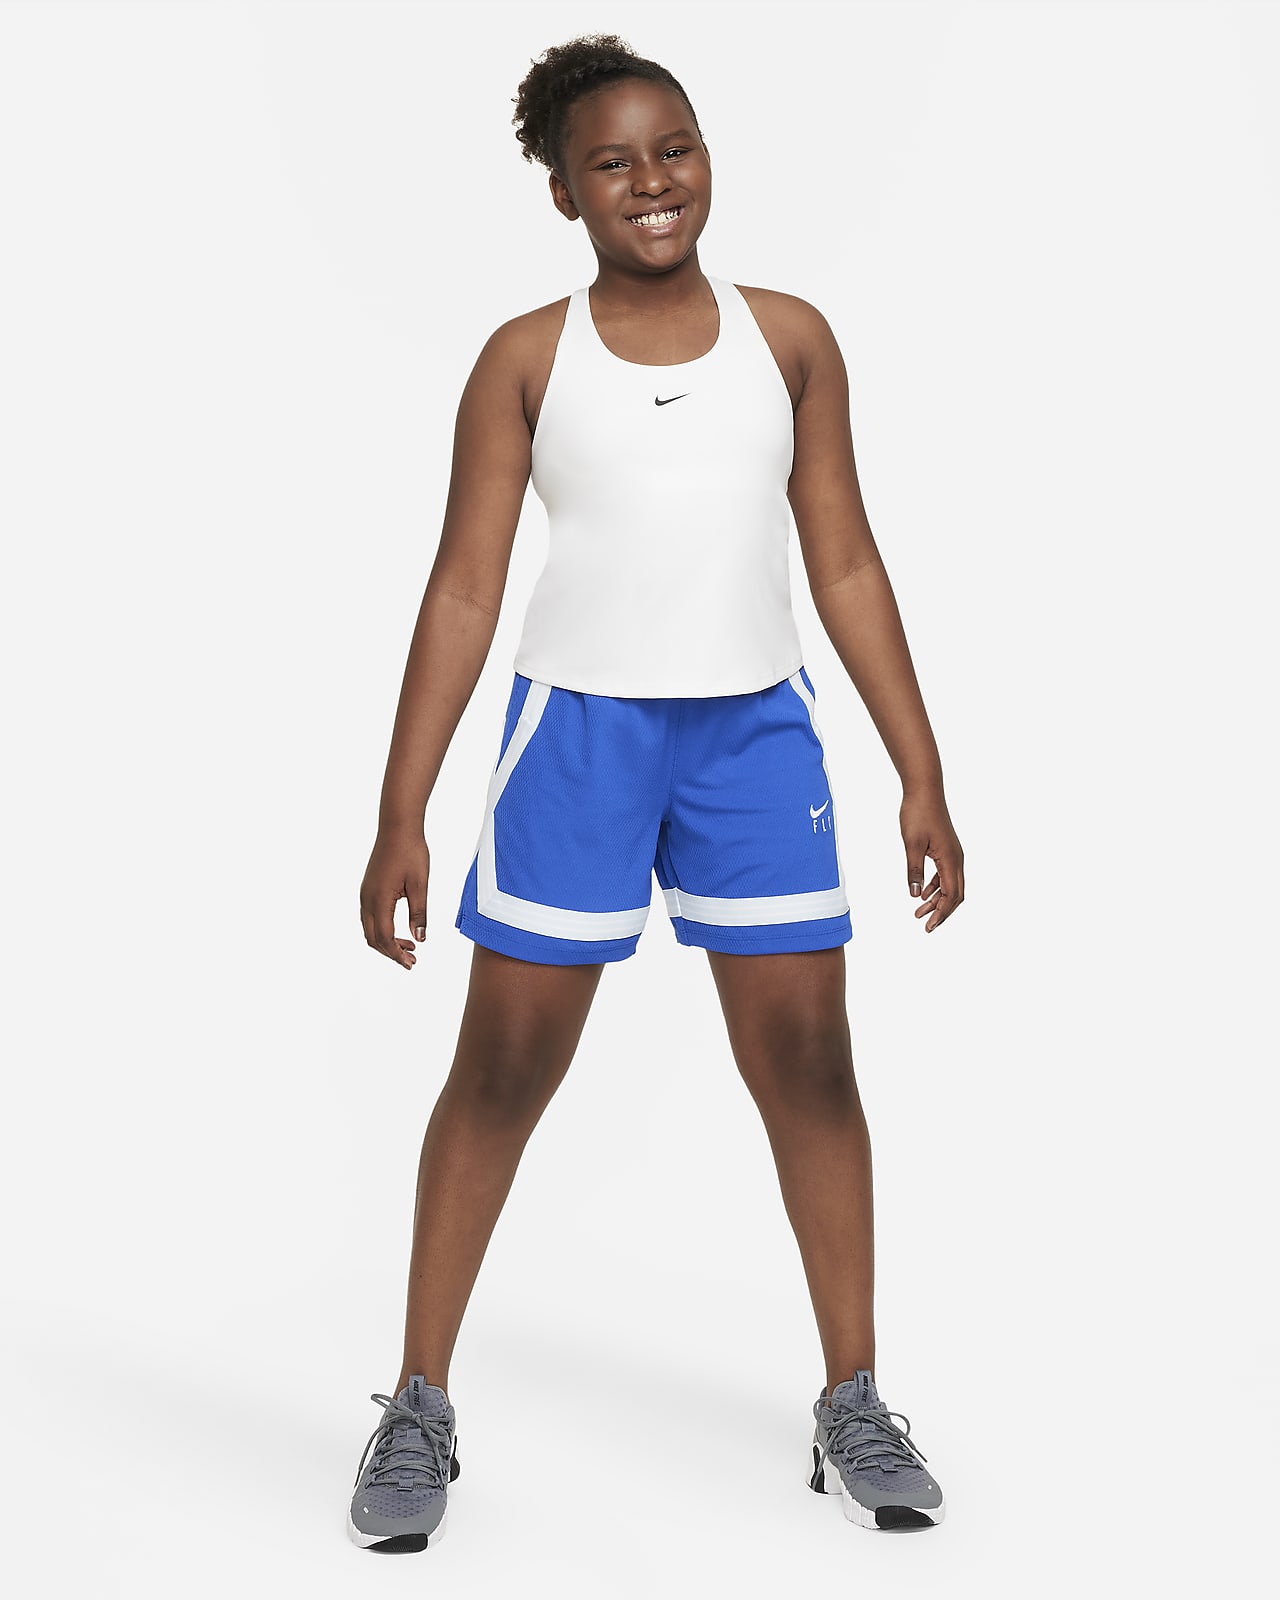  Nike Girl's Swoosh Bra Extended Size (Big Kids) Carbon